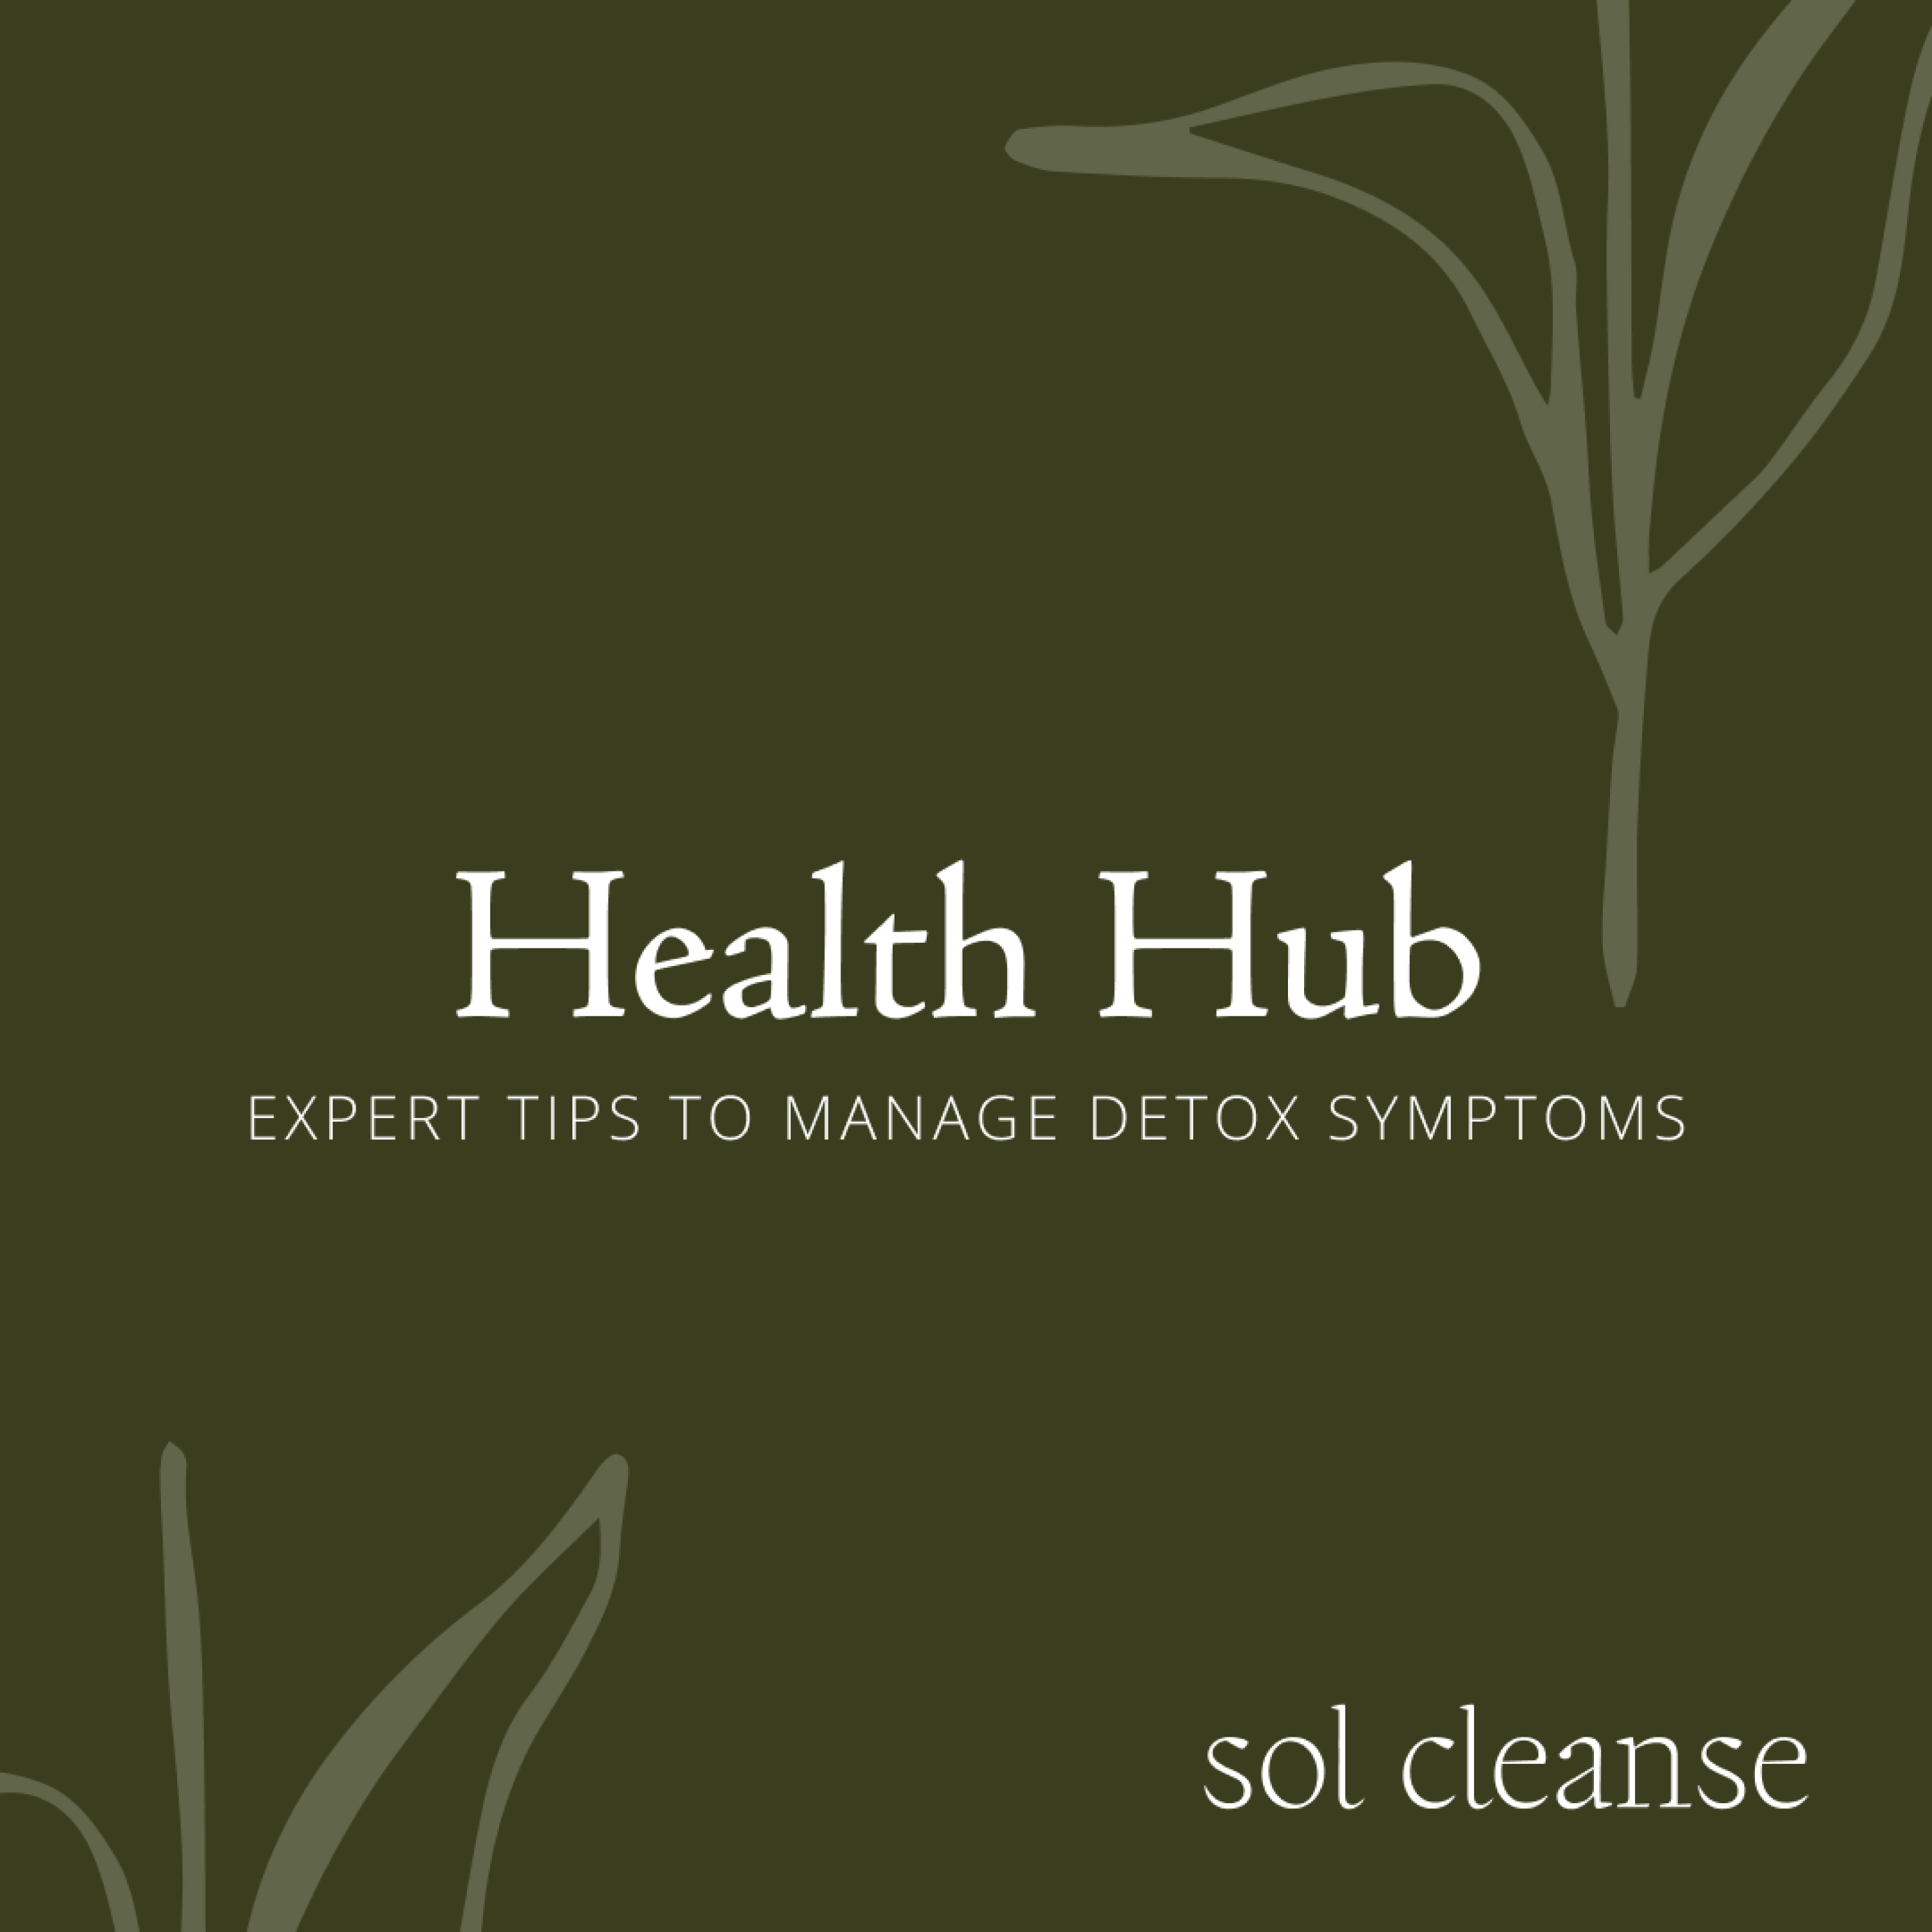 Health Hub: Expert Tips to Manage Detox Symptoms